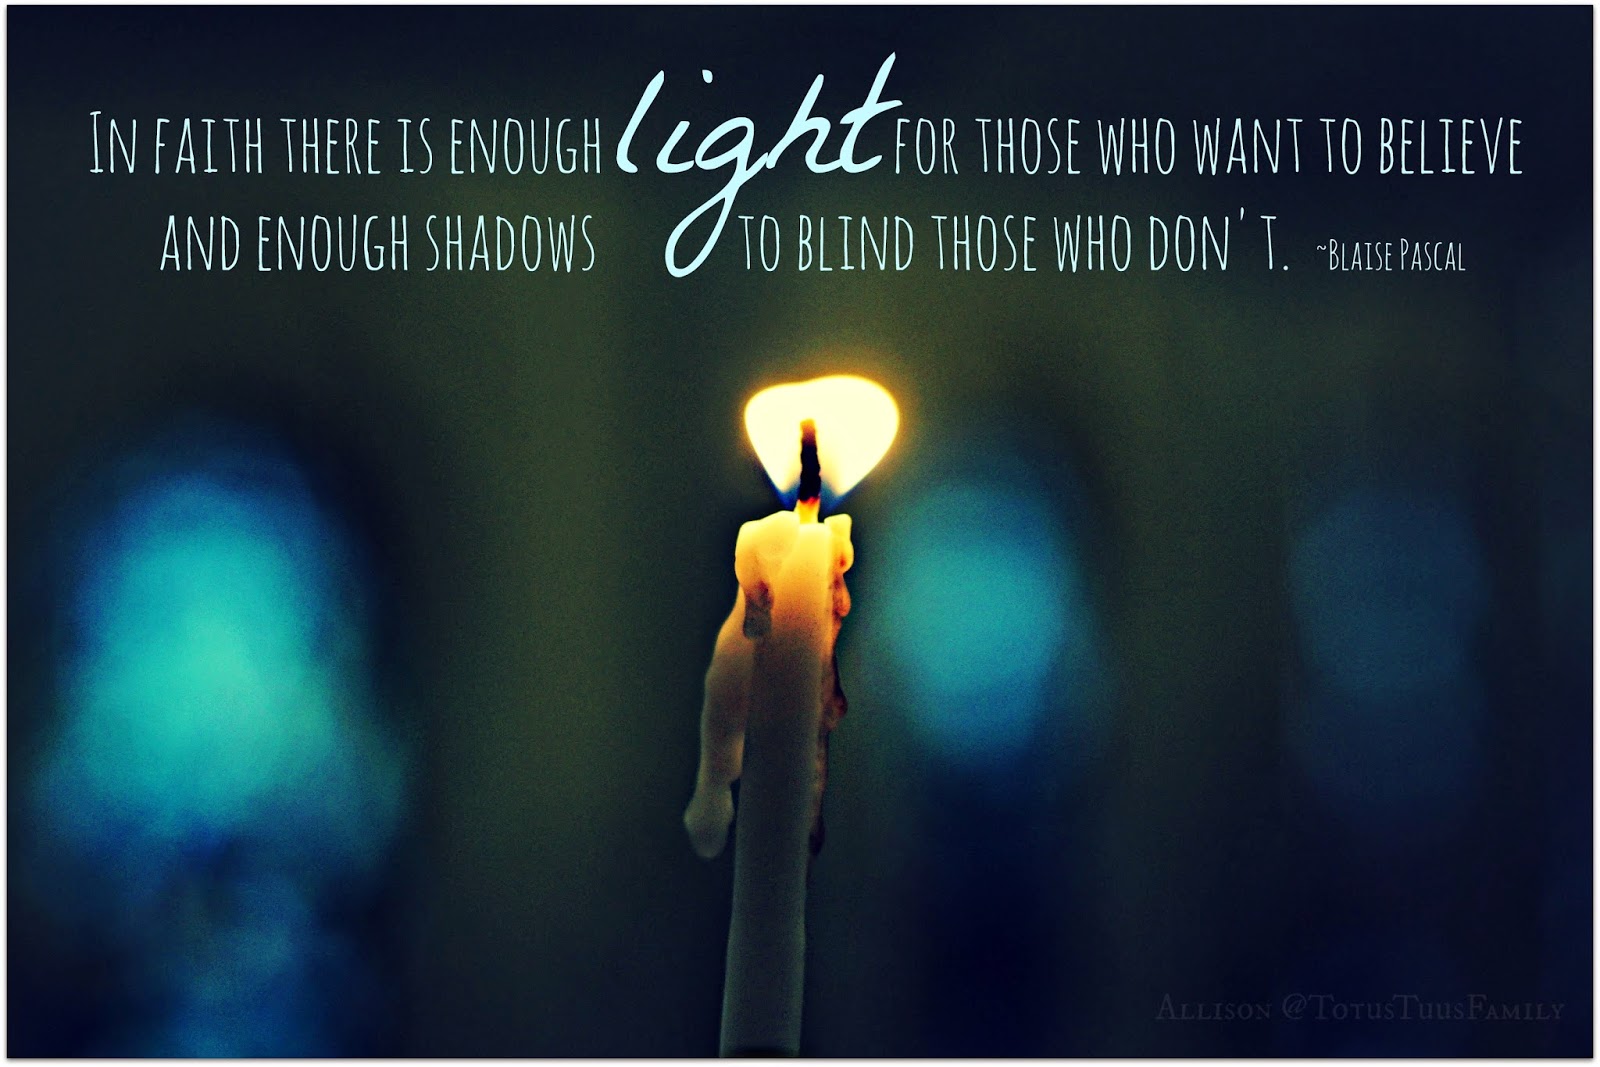 light+quote+candlemass+Blaise+Pascal+2014.jpg